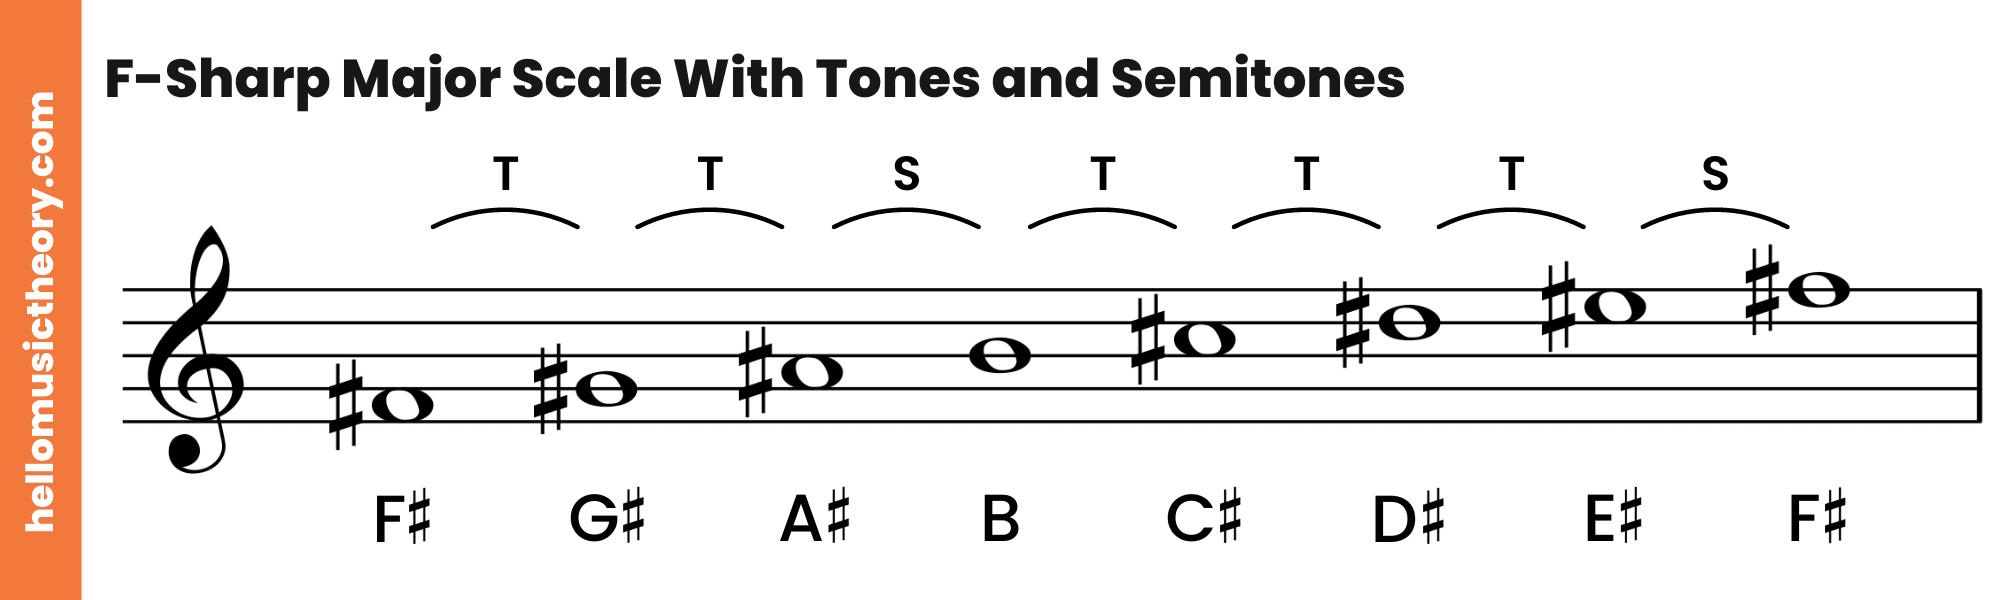 F-Sharp Major Scale Treble Clef With Tones and Semitones